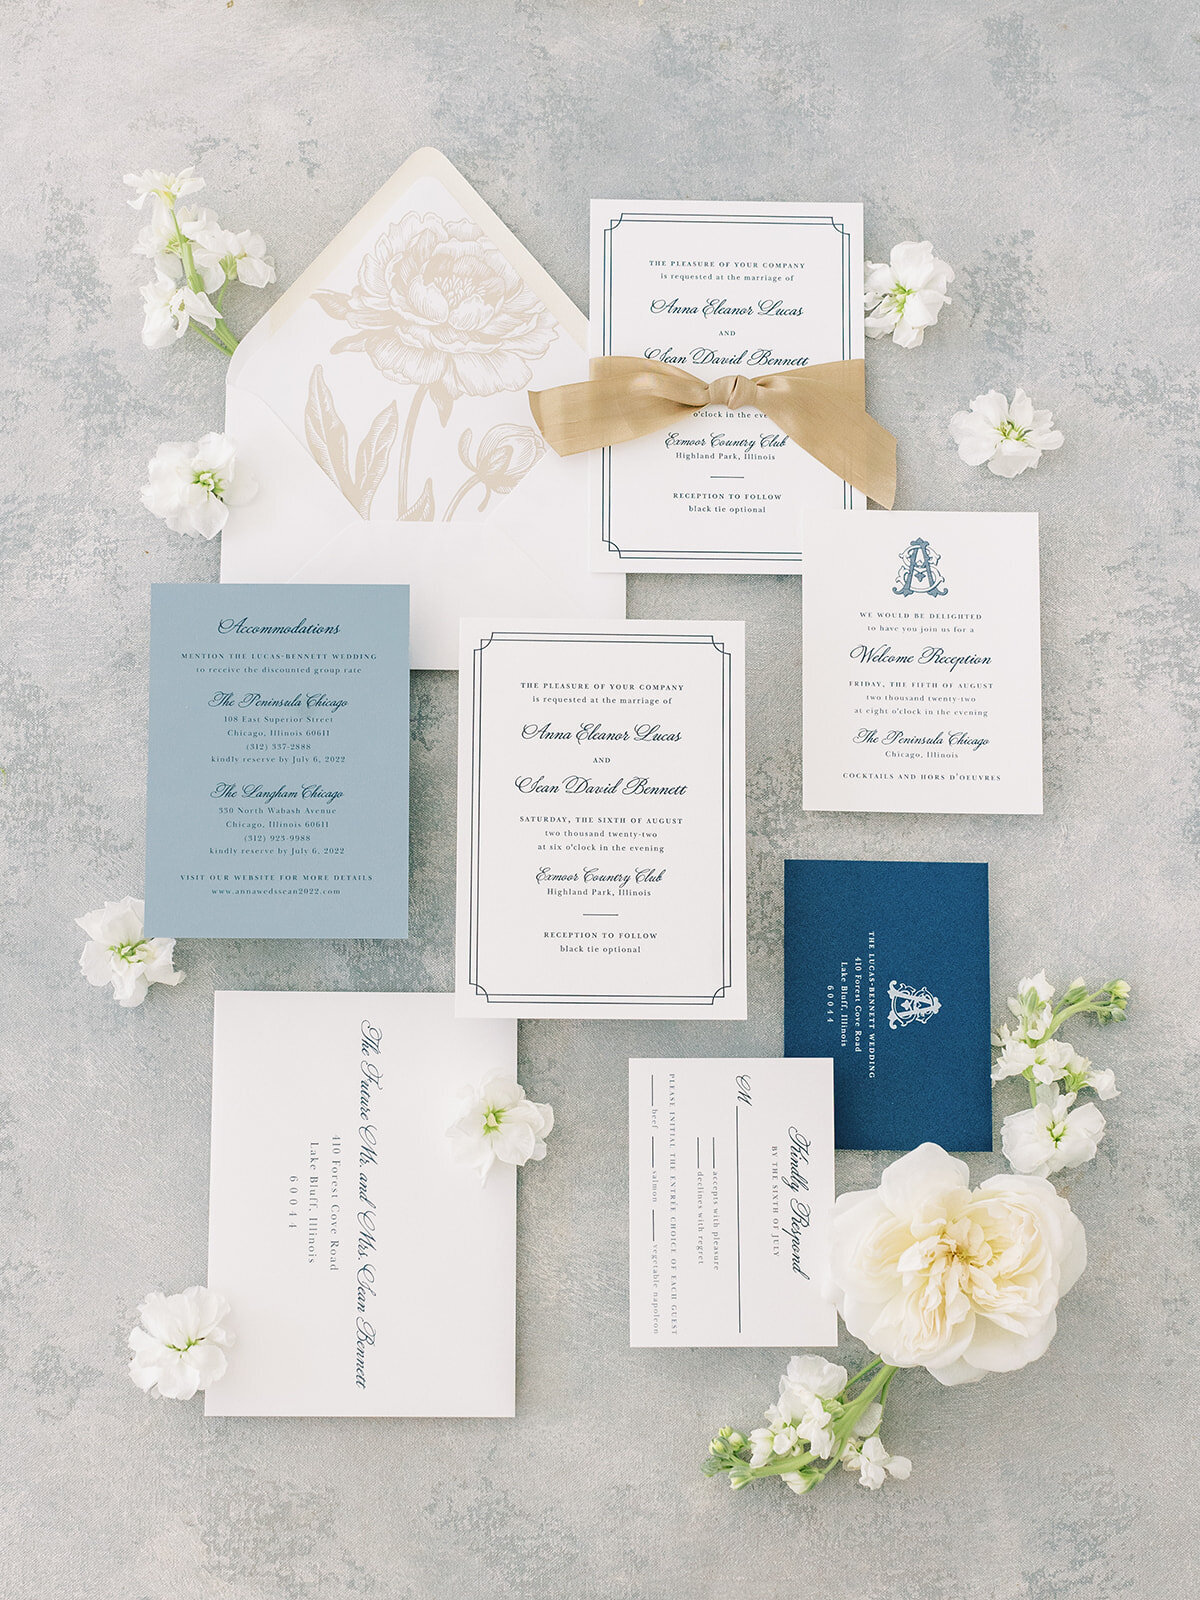 Kelly McDevitt Design Letterpress Wedding Invitation